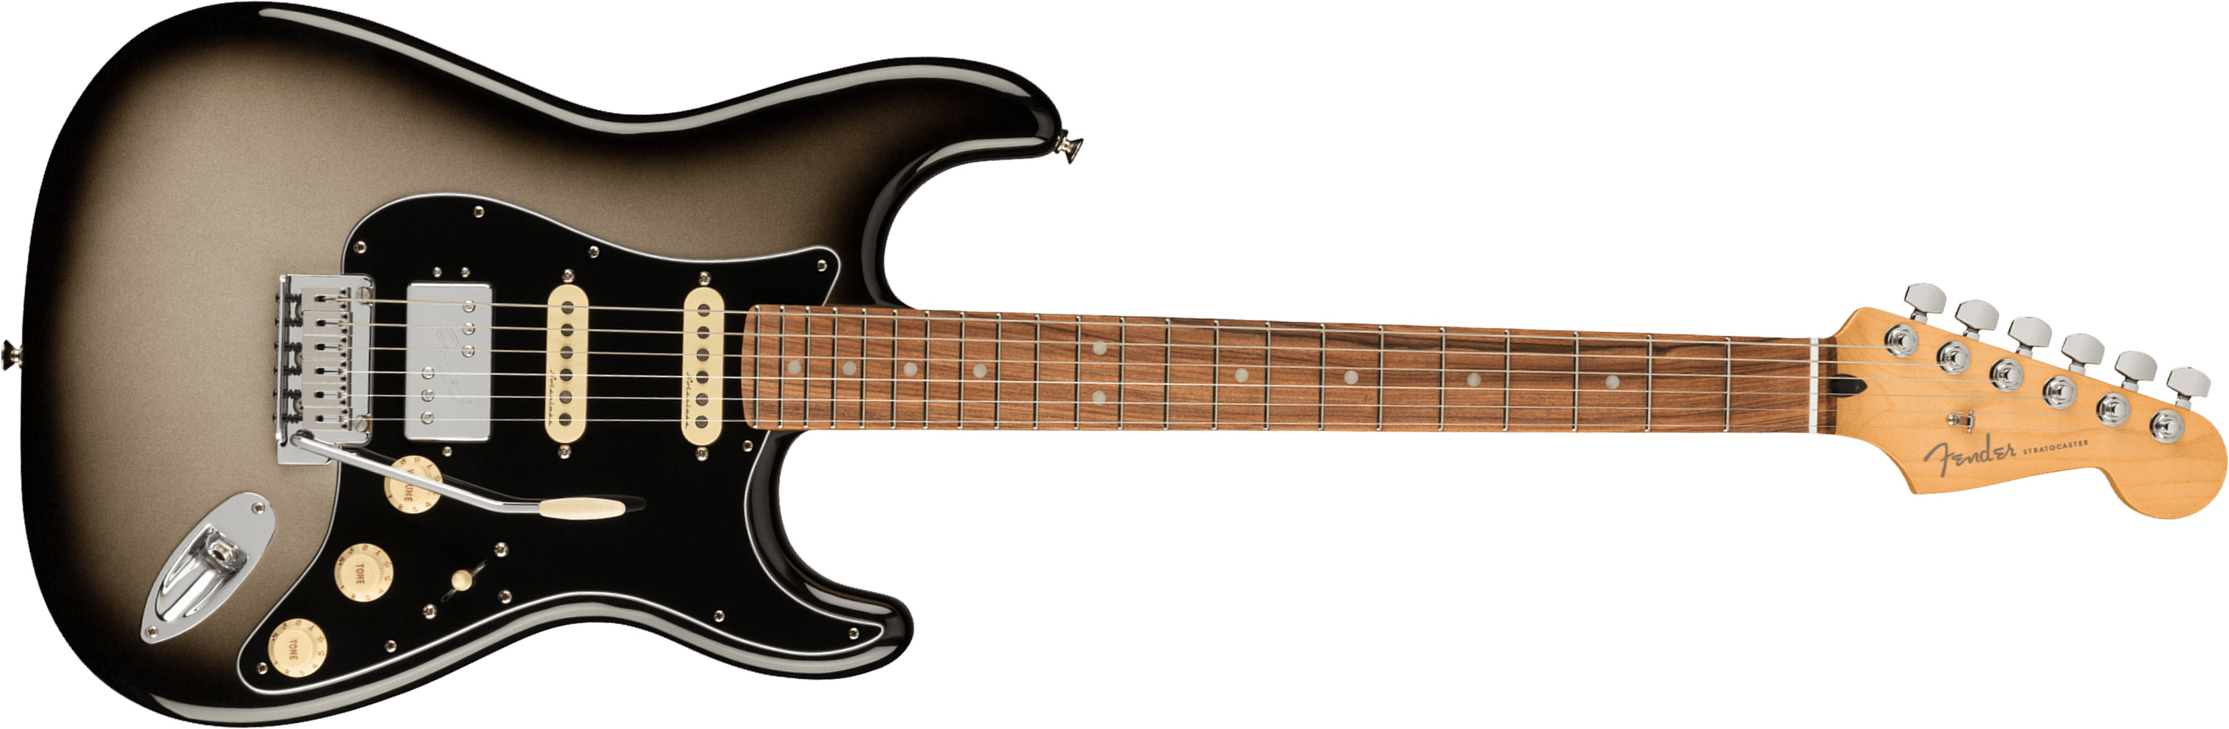 Fender Strat Player Plus Mex Hss Trem Pf - Silverburst - Str shape electric guitar - Main picture